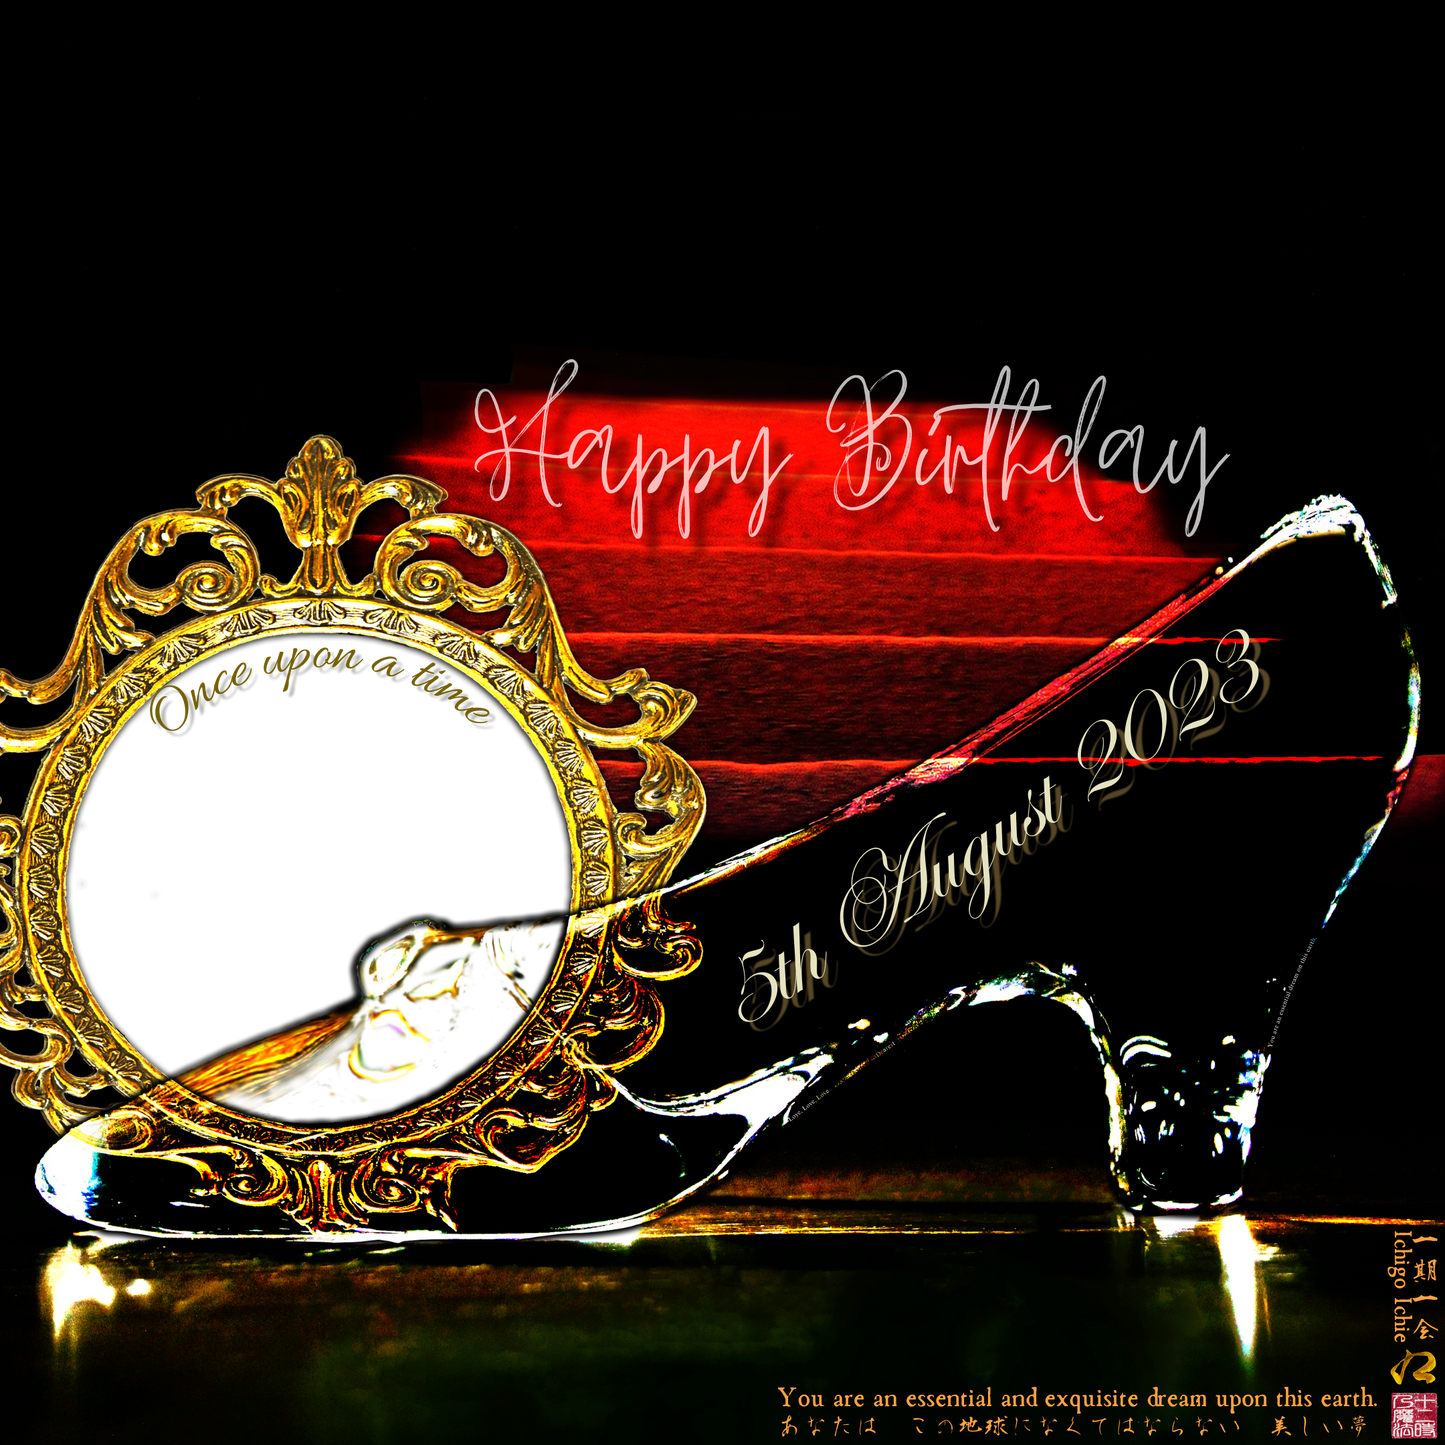 Happy Birthday Glass Slipper "Ichigo Ichie" 5th August 2023 the Left (1-of-1) NFT Art